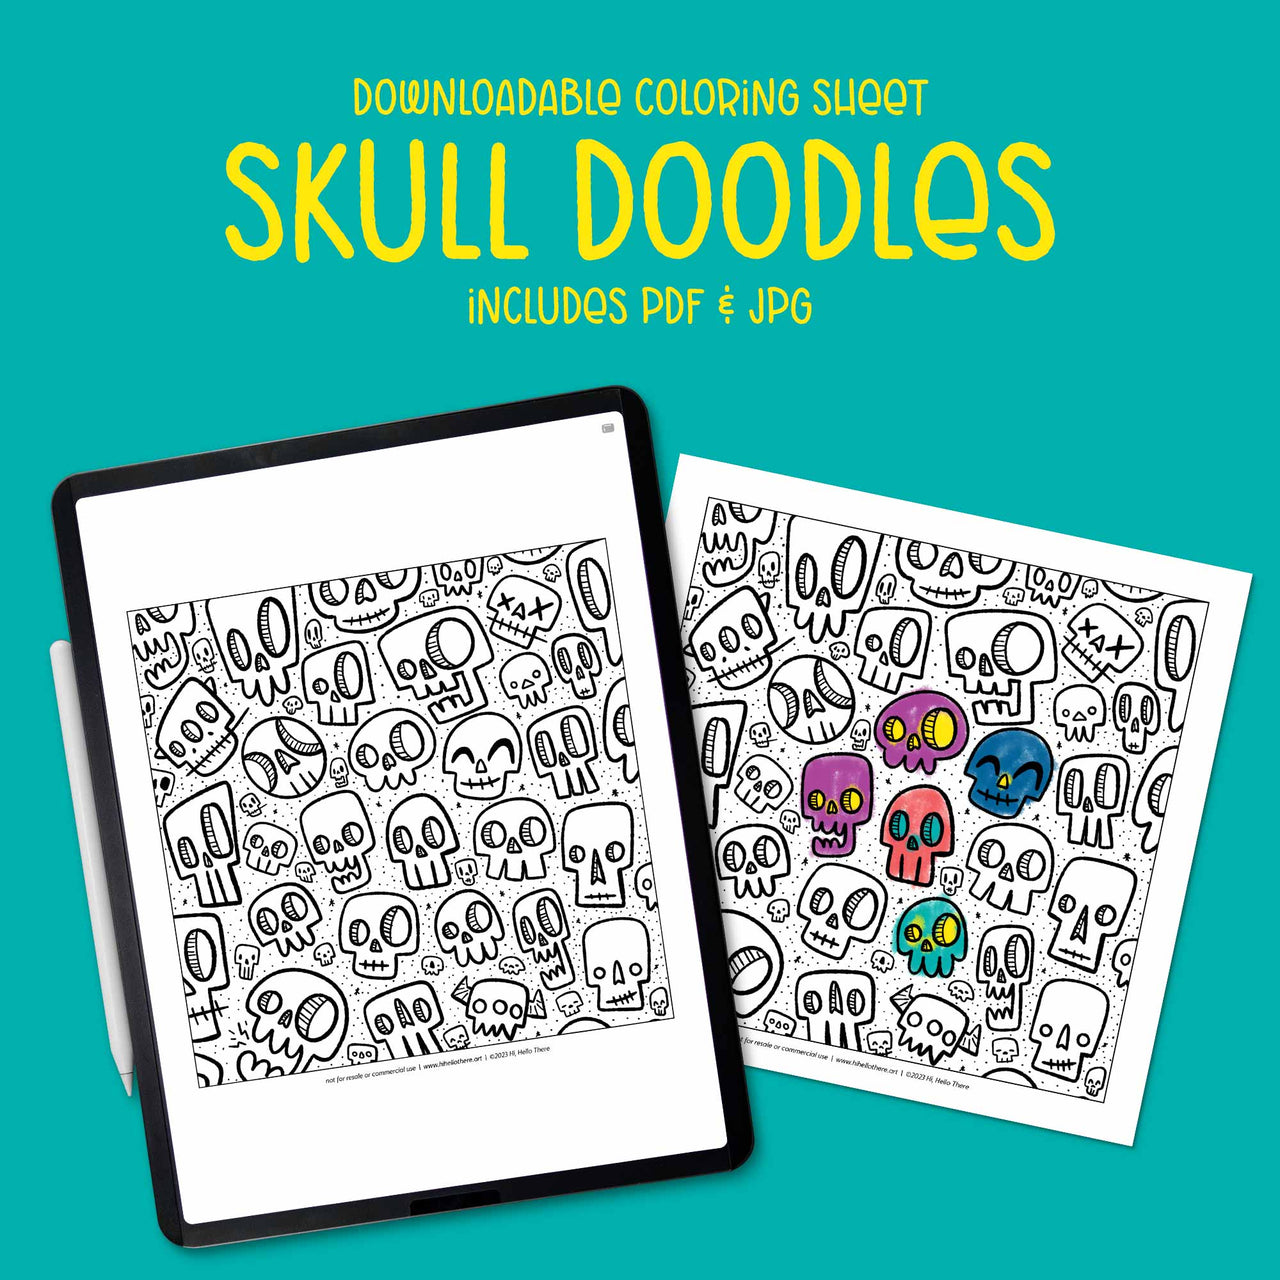 Skull Doodles Downloadable Coloring Sheet